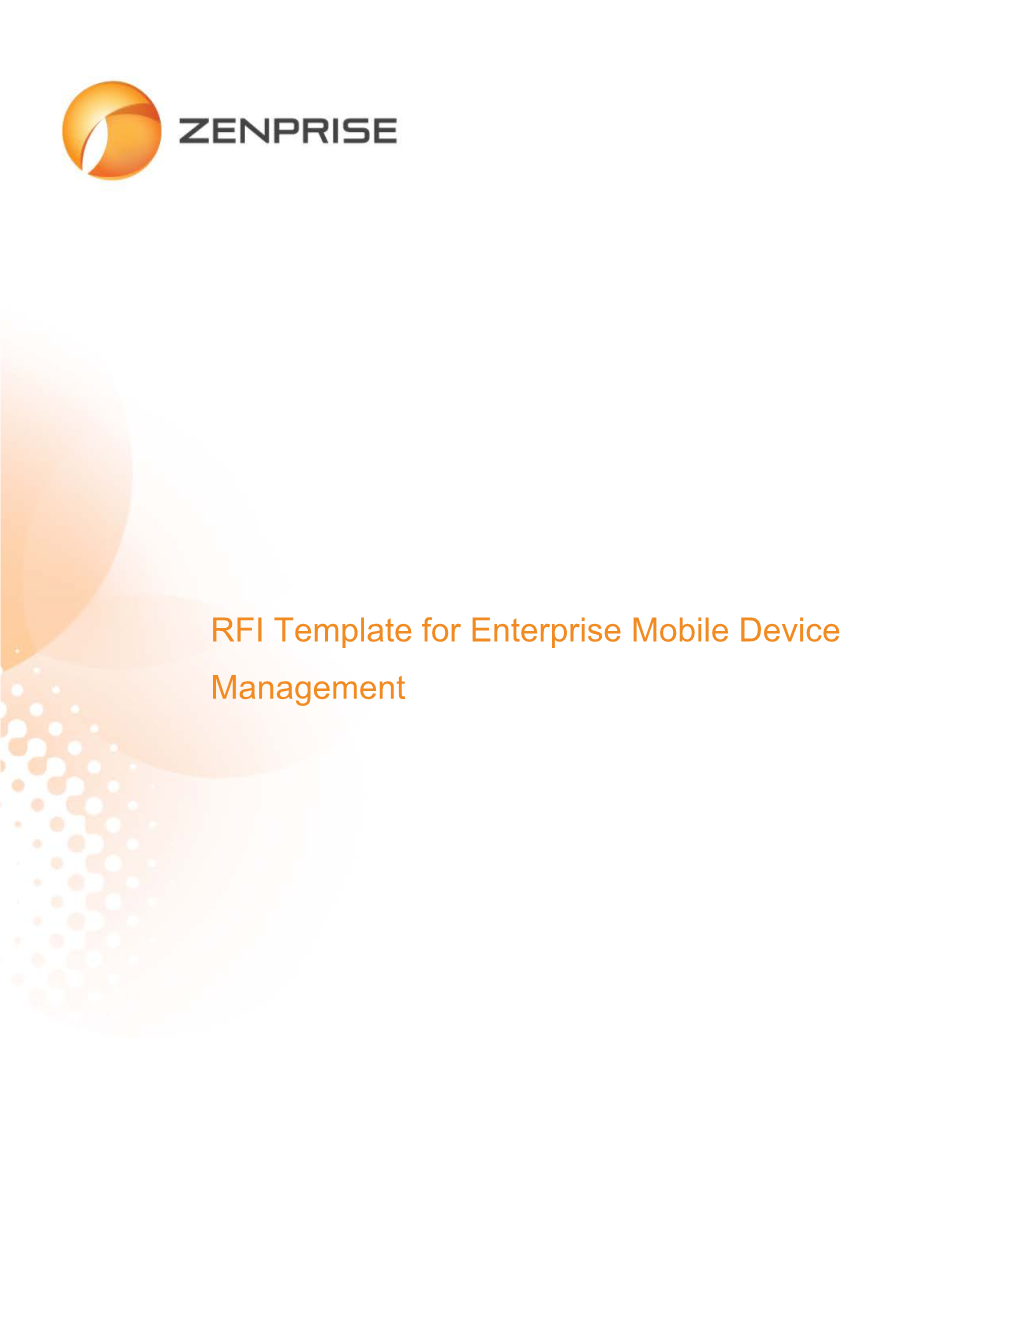 RFI Template for Enterprise Mobile Device Management